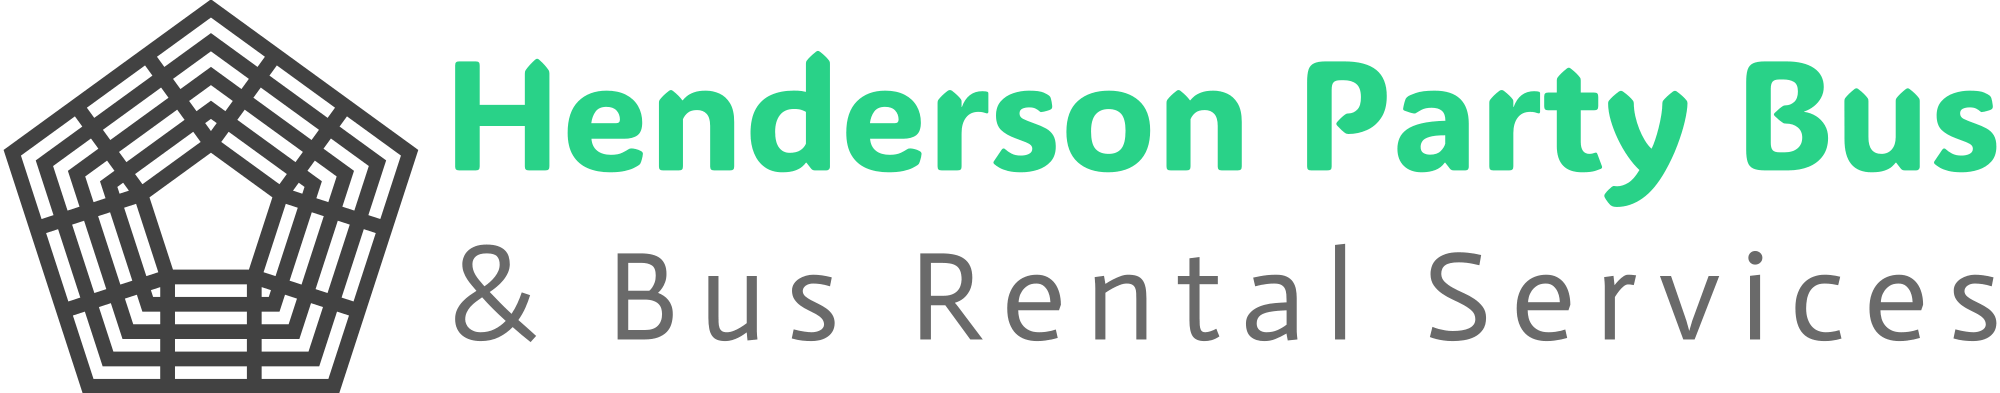 Party Bus Henderson logo